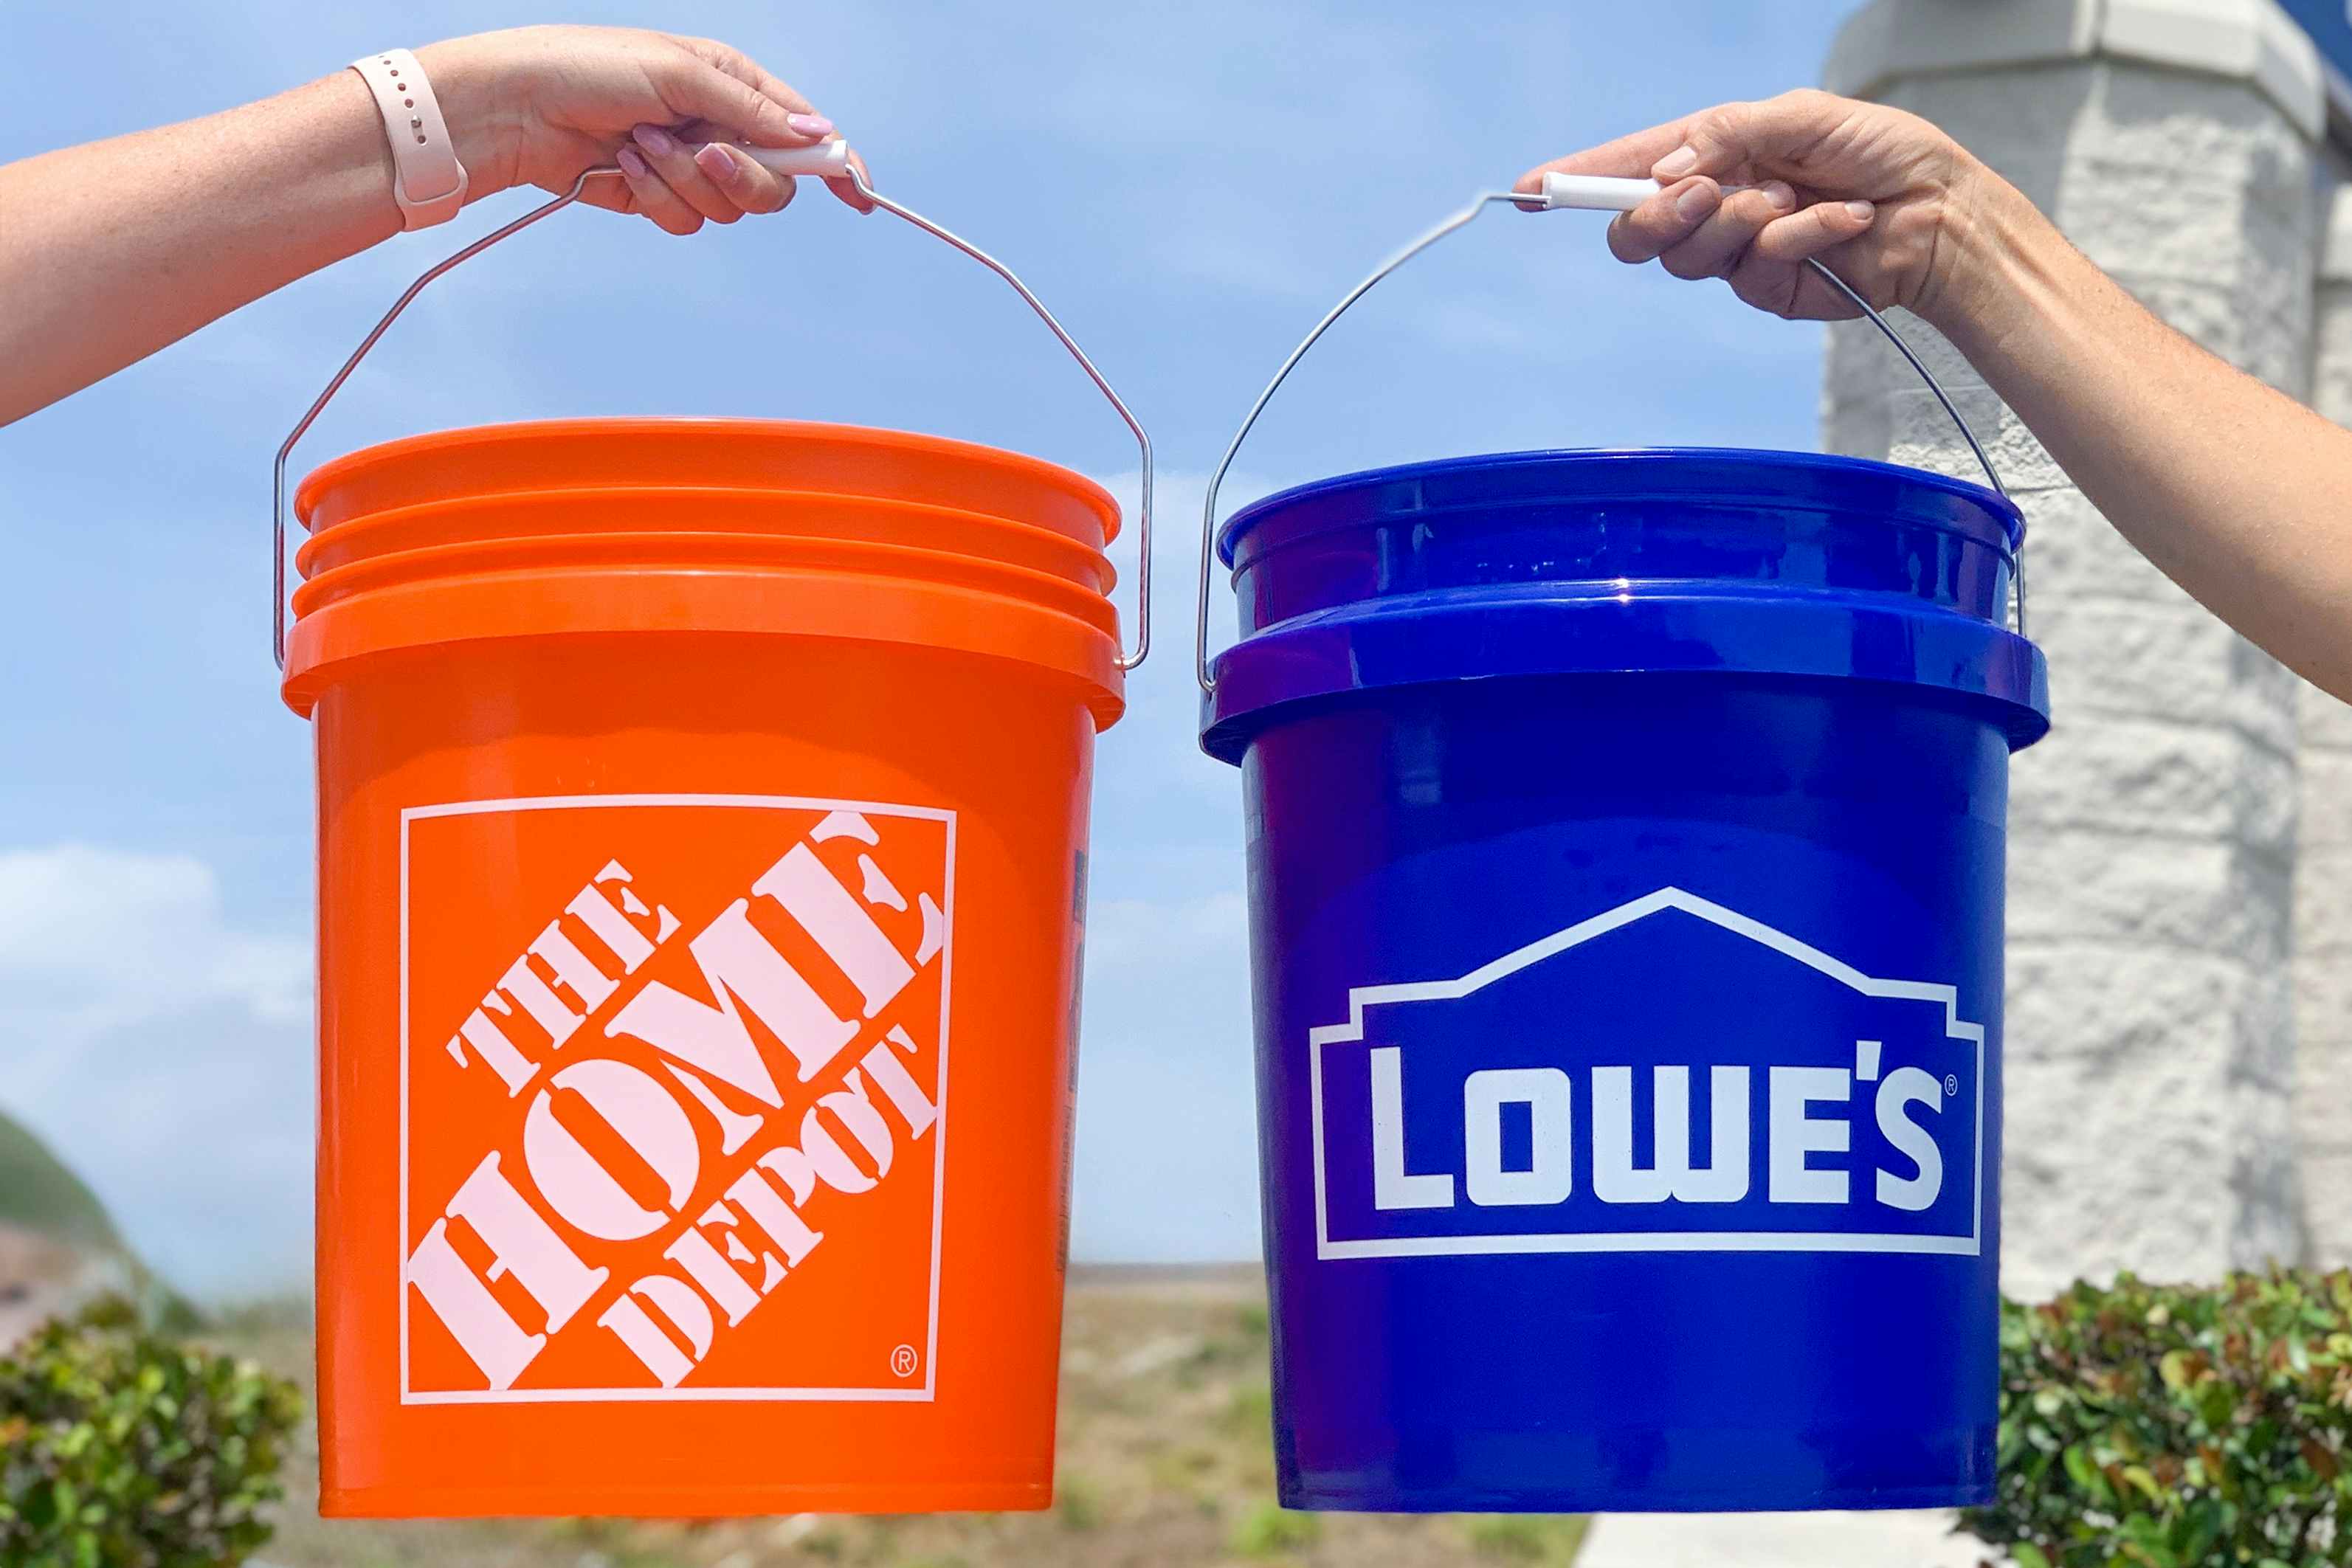 lowes-versus-home-depot-comparison-buckets-featured-crop